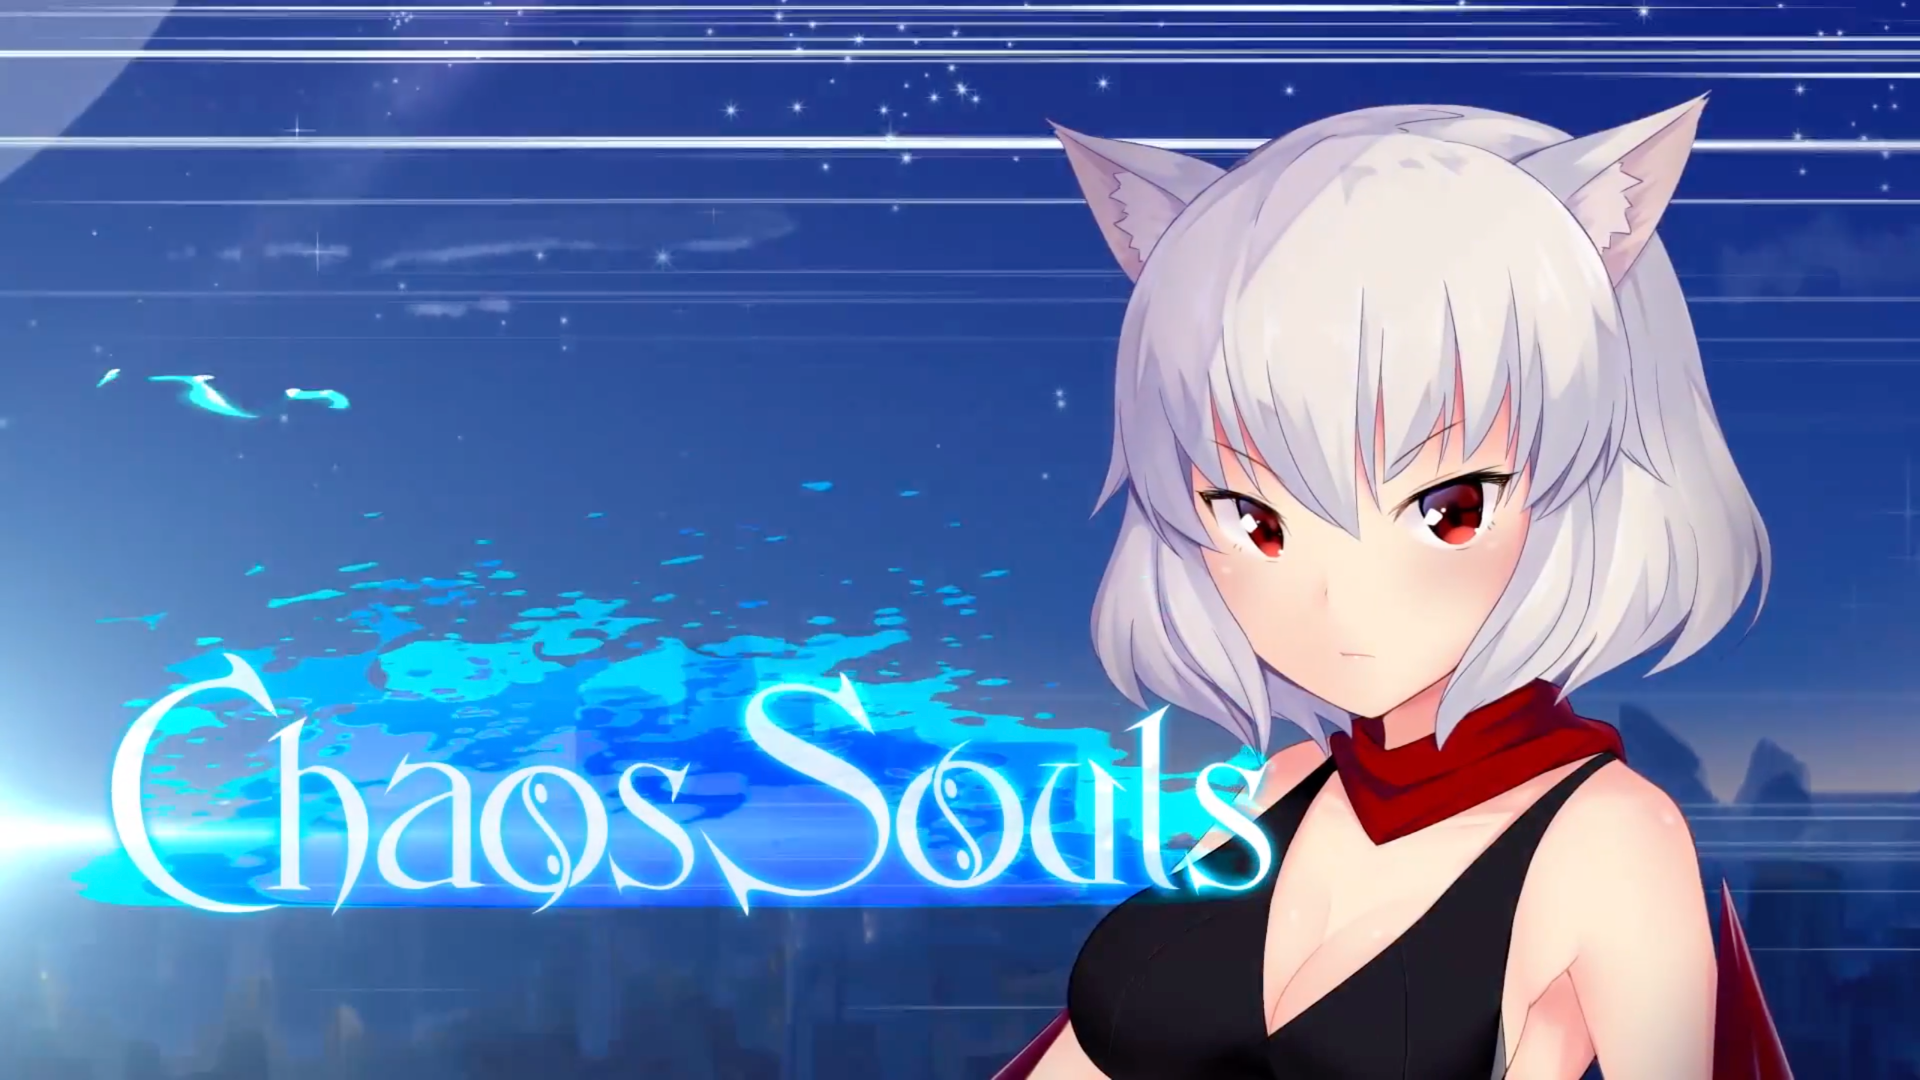 Chaos Souls